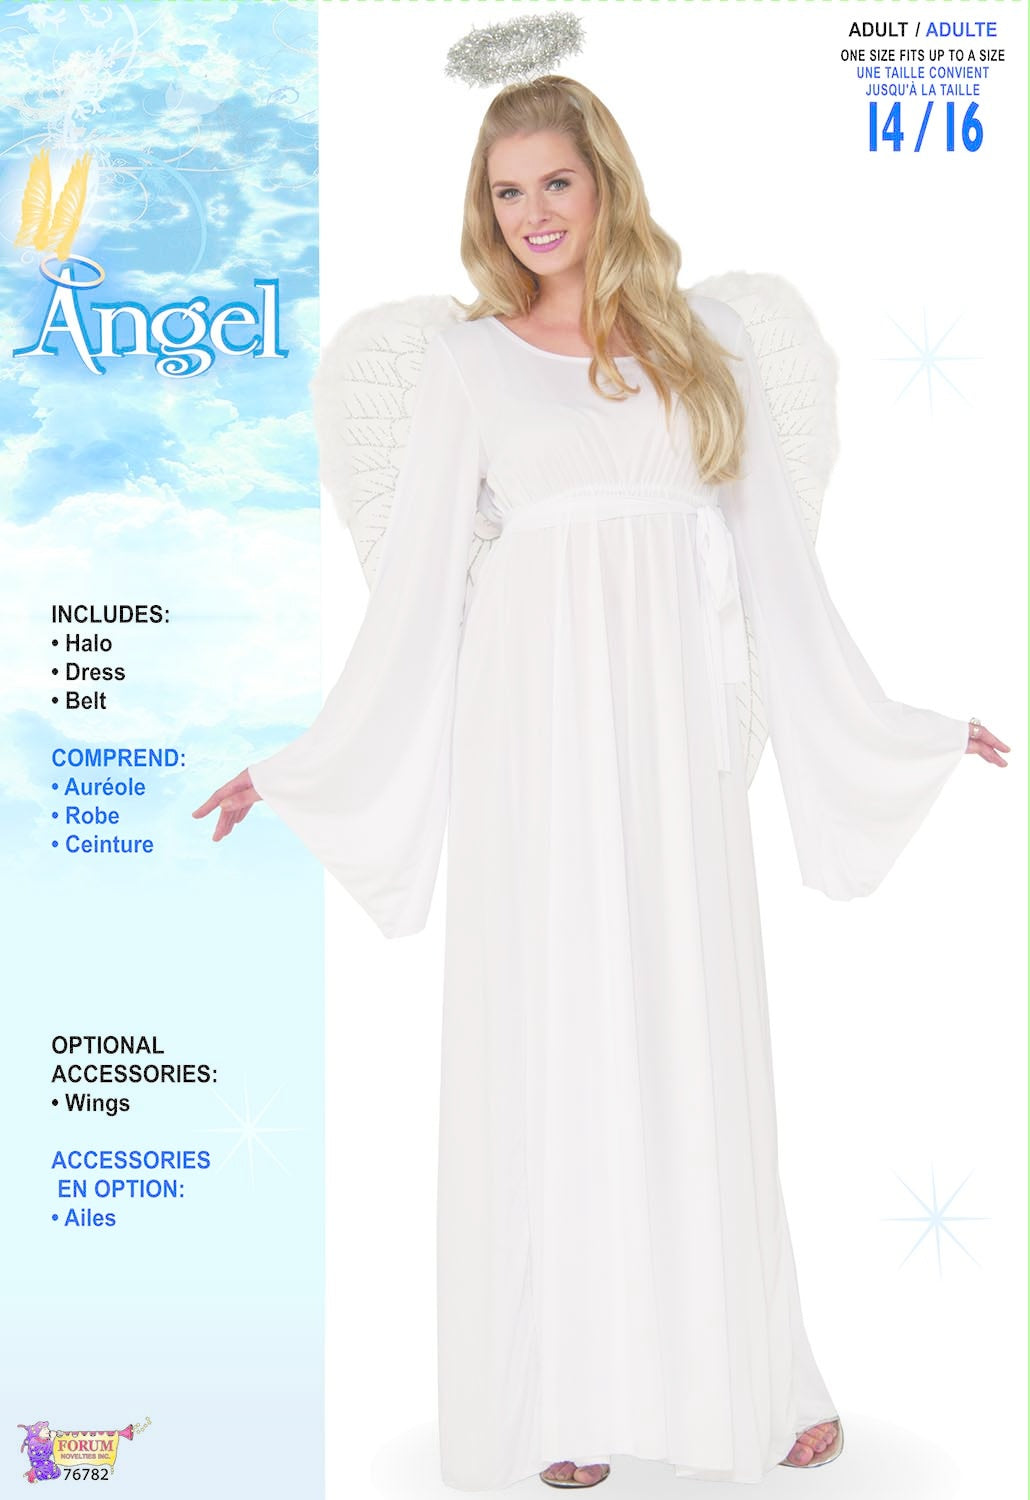 Angel - Standard Adult Size